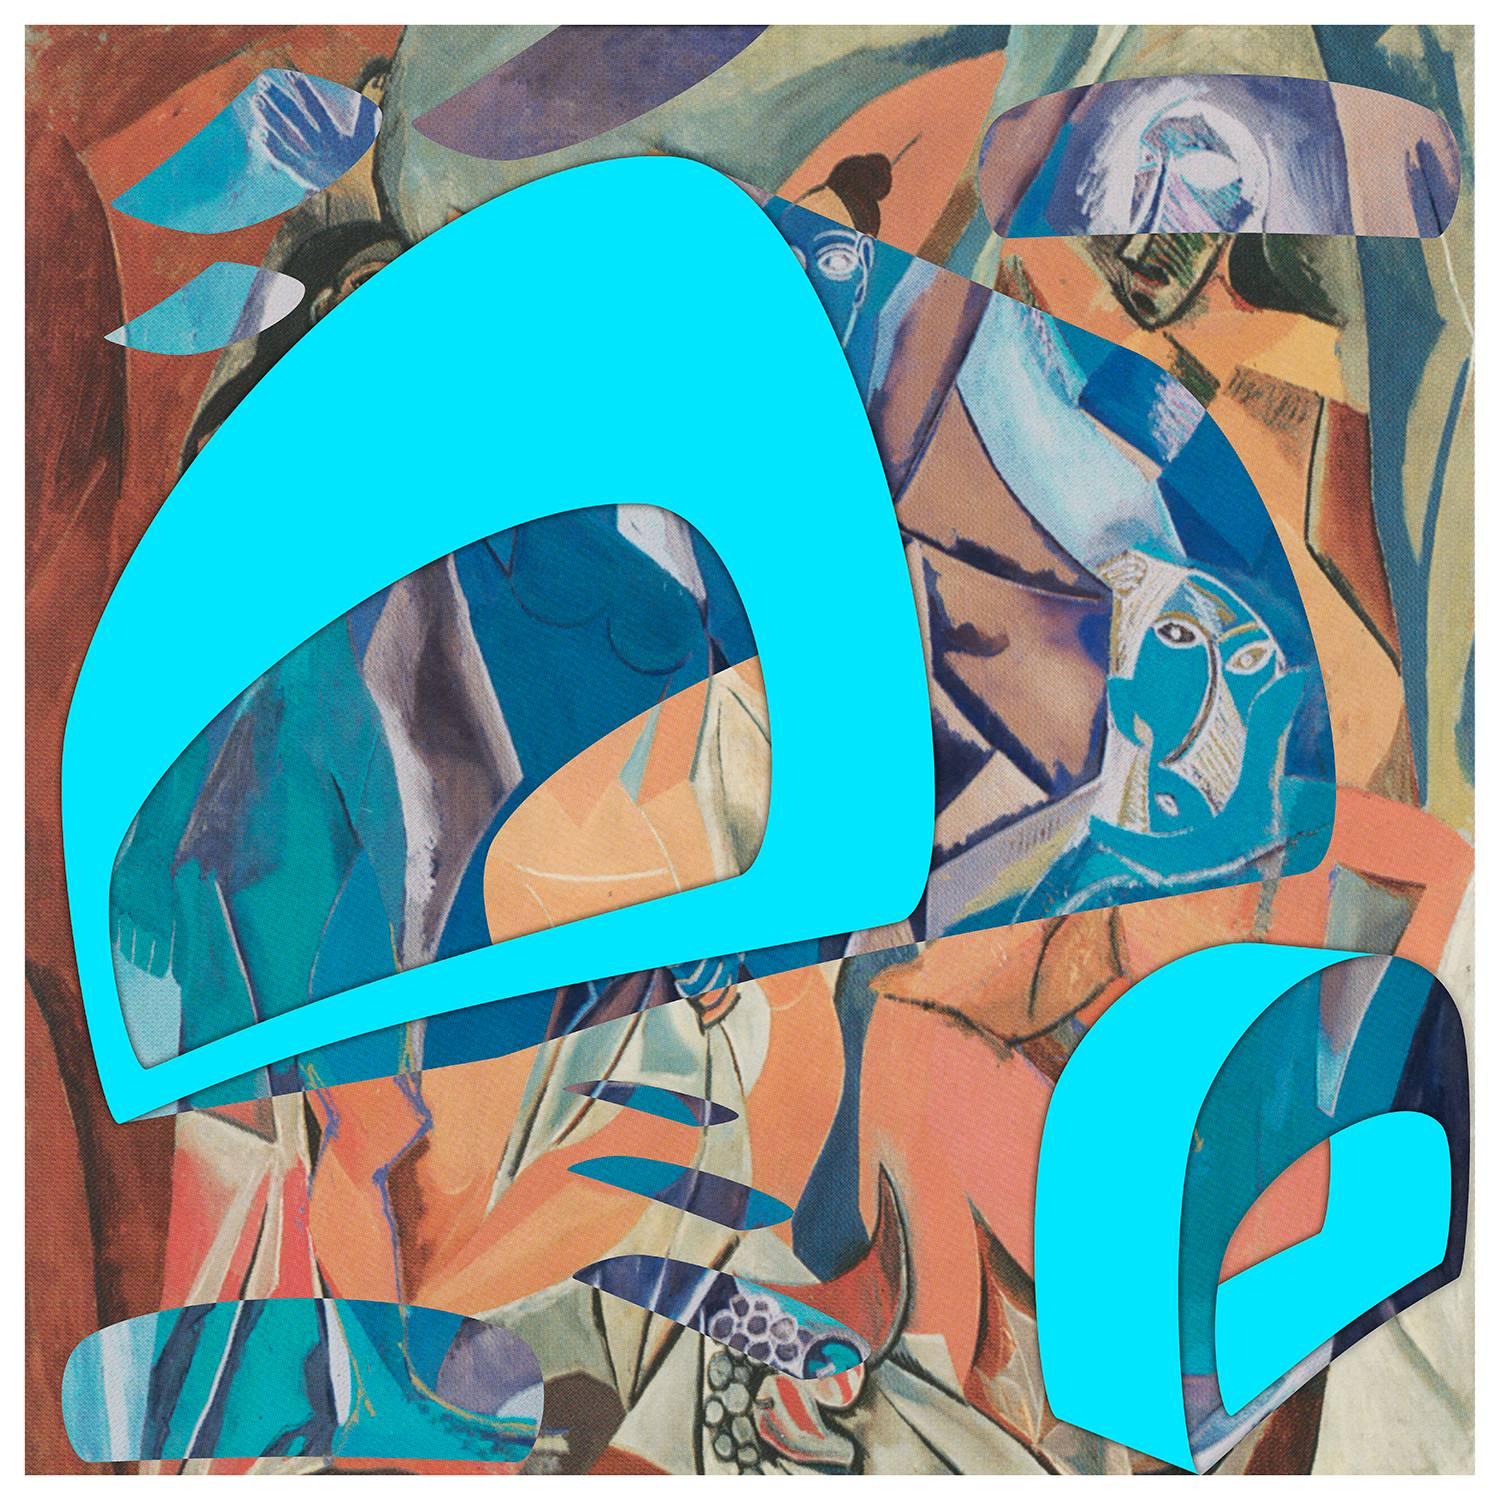 Sonny Assu Abstract Print - #fangasm, Pabs was TOTALLY inspired by meeeeeeeee111!